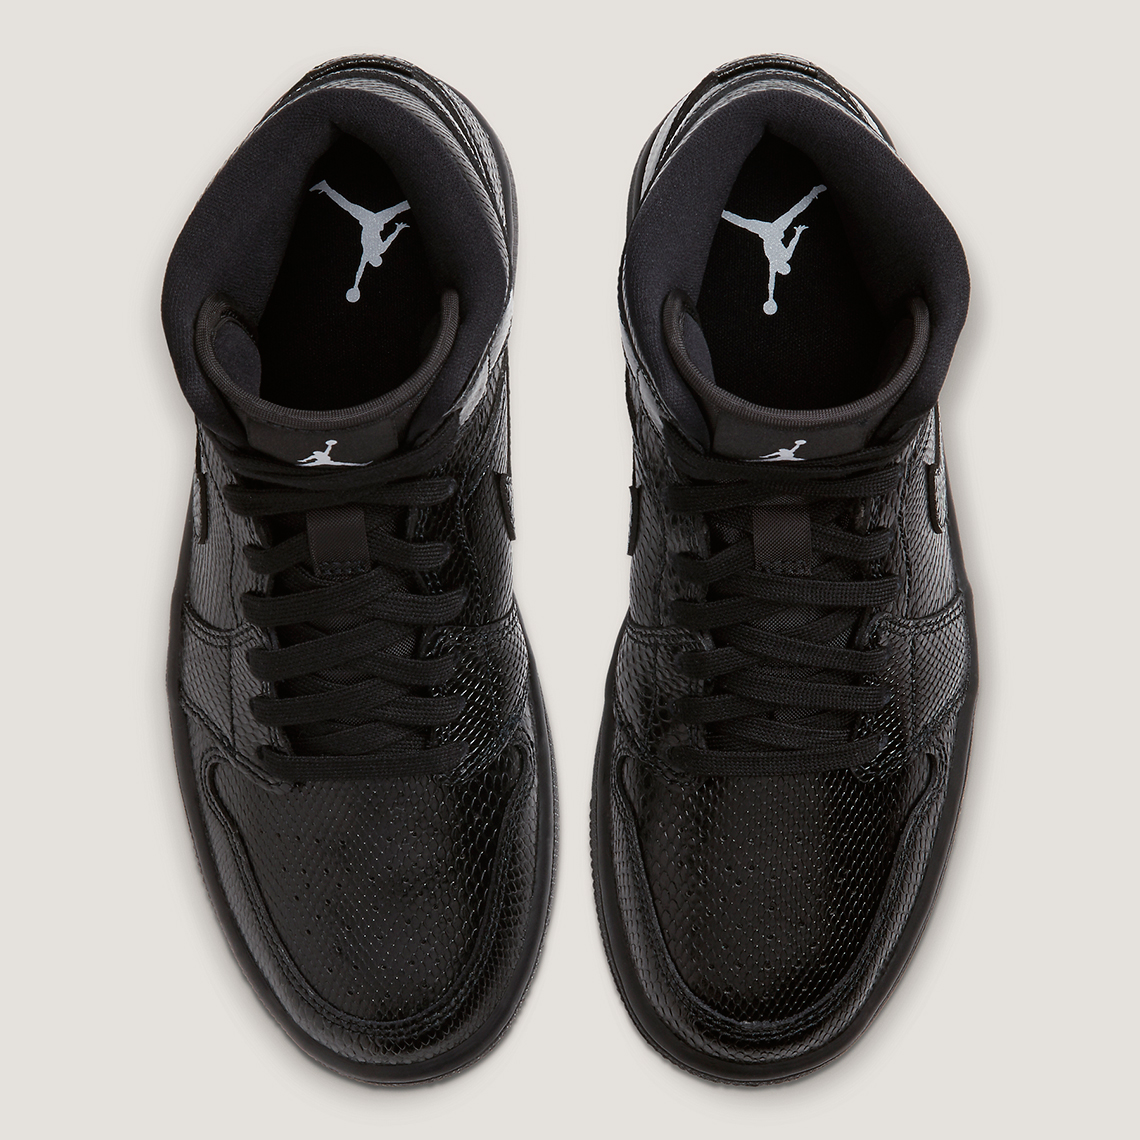 Nike Air chaussures Jordan Mars 270 Citrus Mid Black Snakeskin Bq6472 010 4